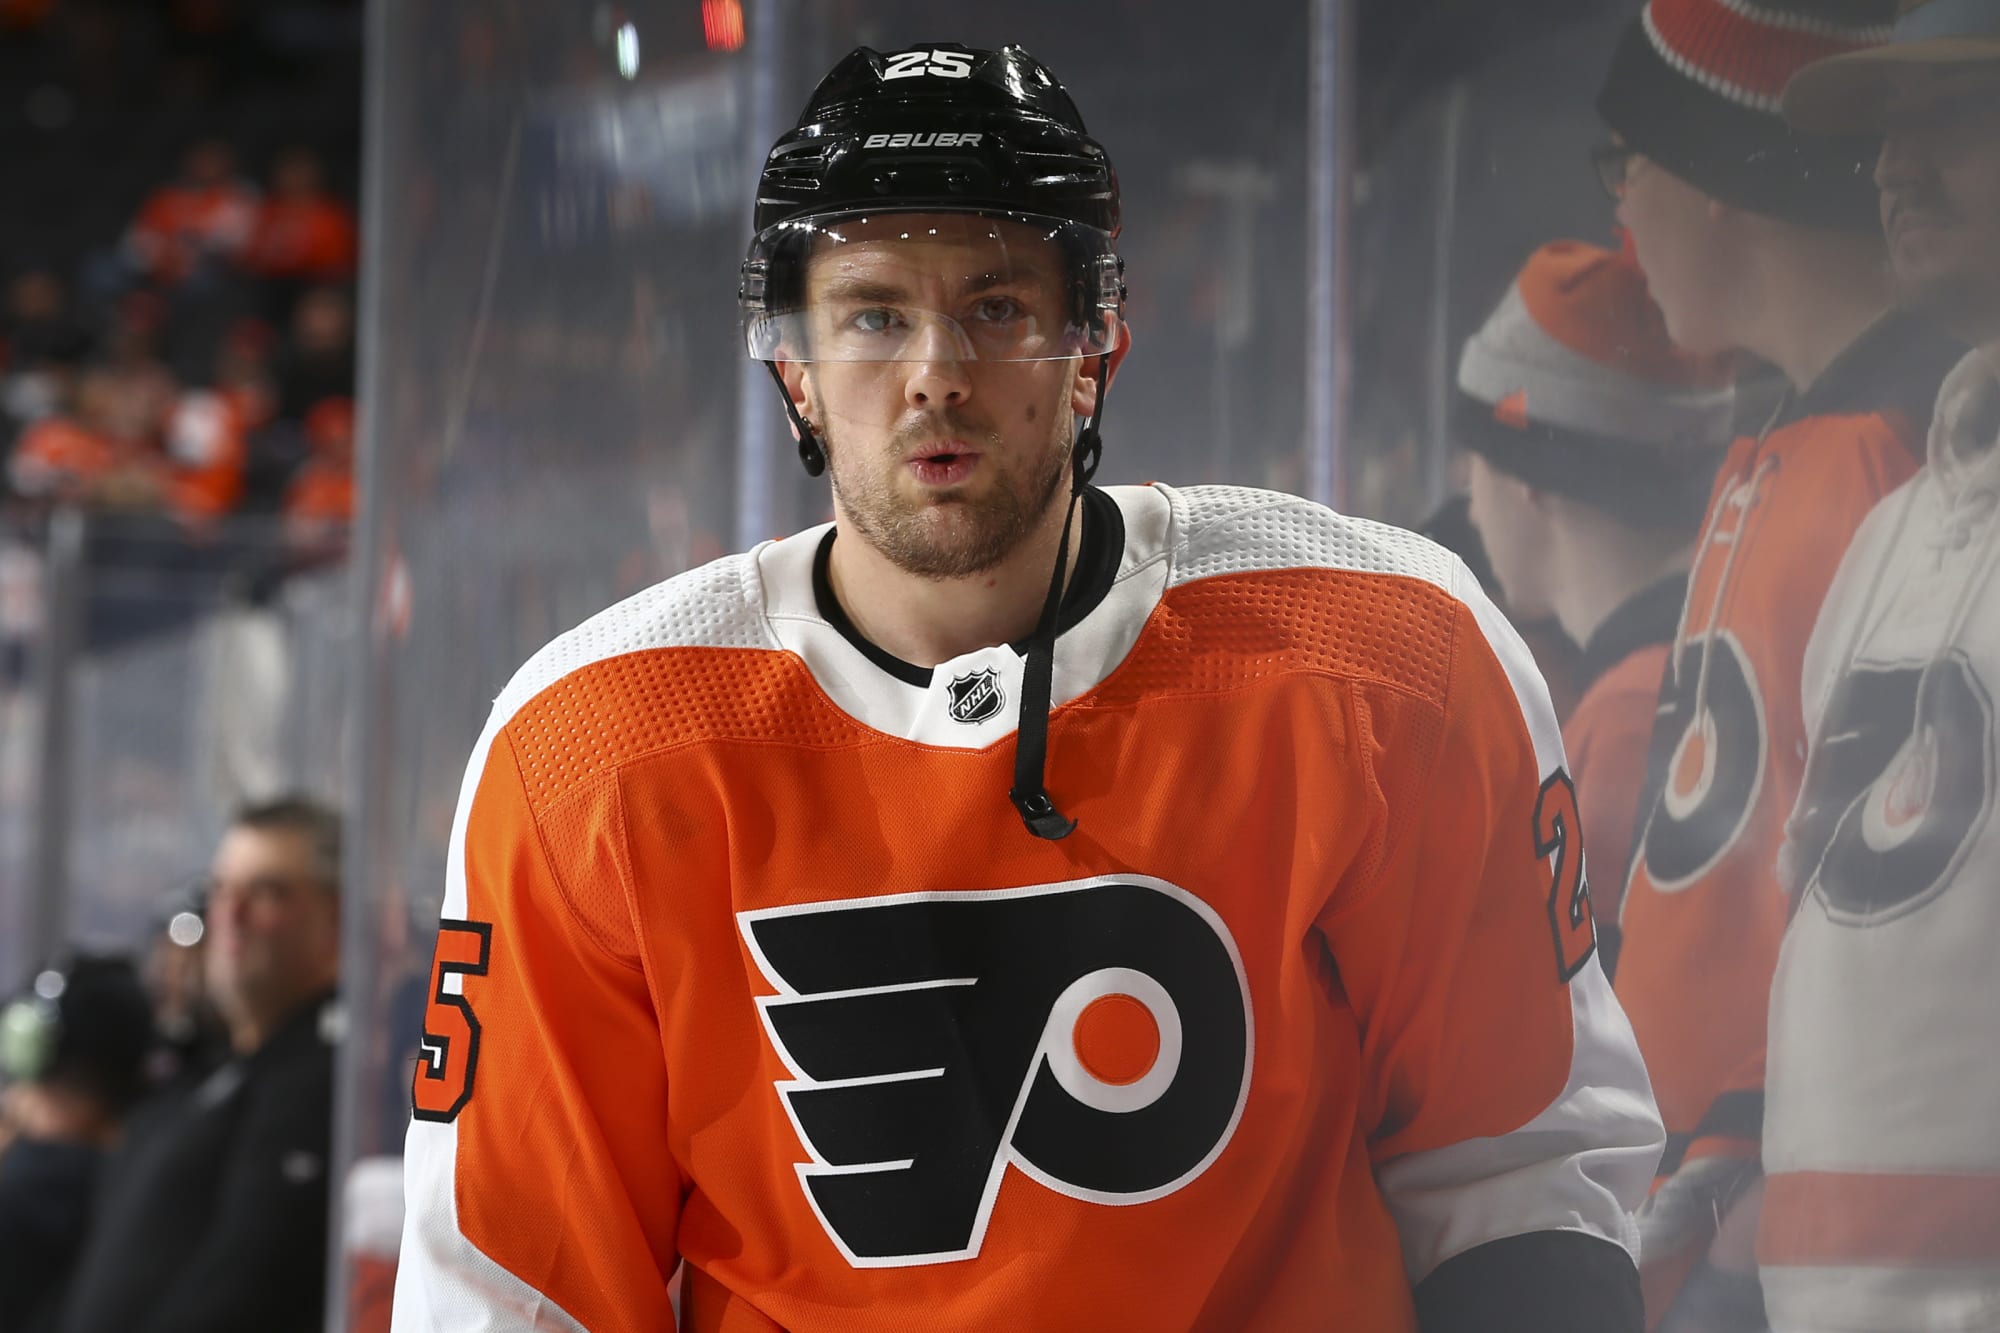 Around the NHL: Philadelphia Flyers' James van Riemsdyk, a New